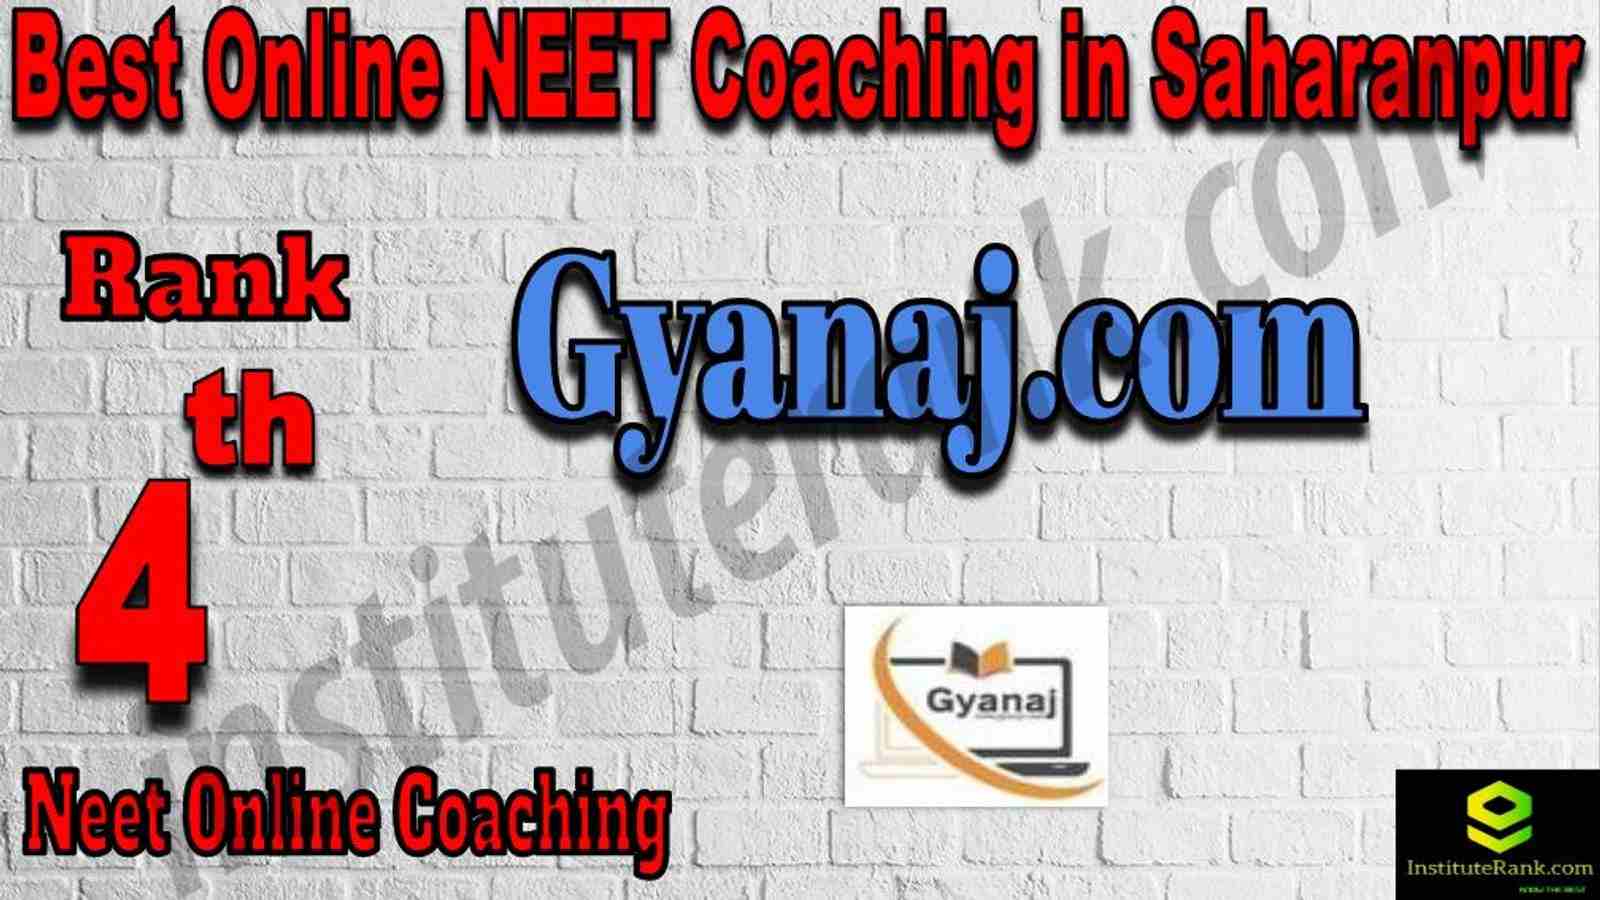 4th Best Online Neet Coaching in Saharanpur